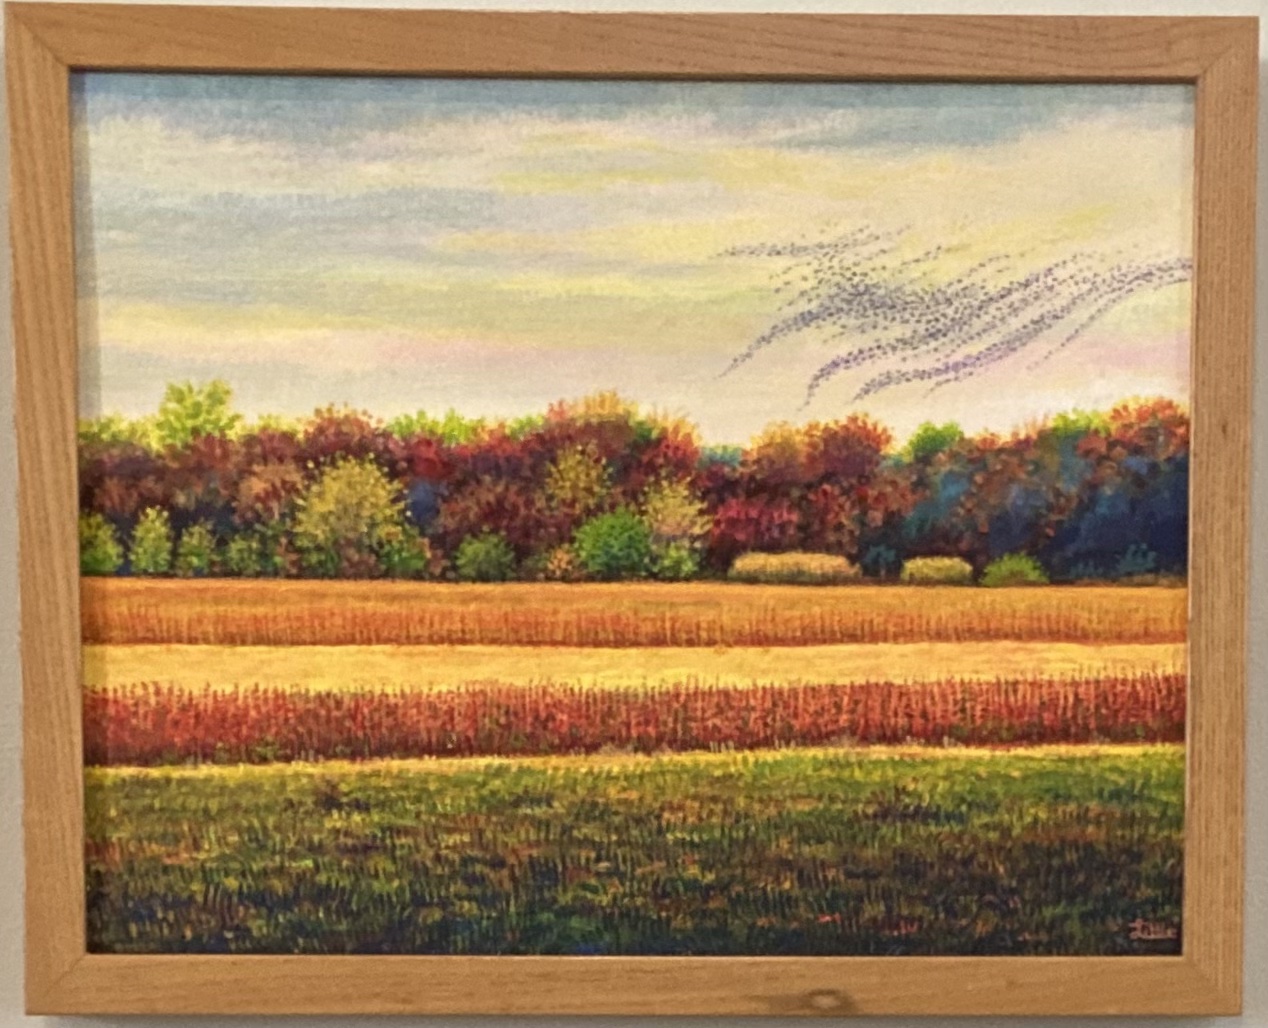 The Purr of Harvest
Acrylic
14" X 11"
$550.